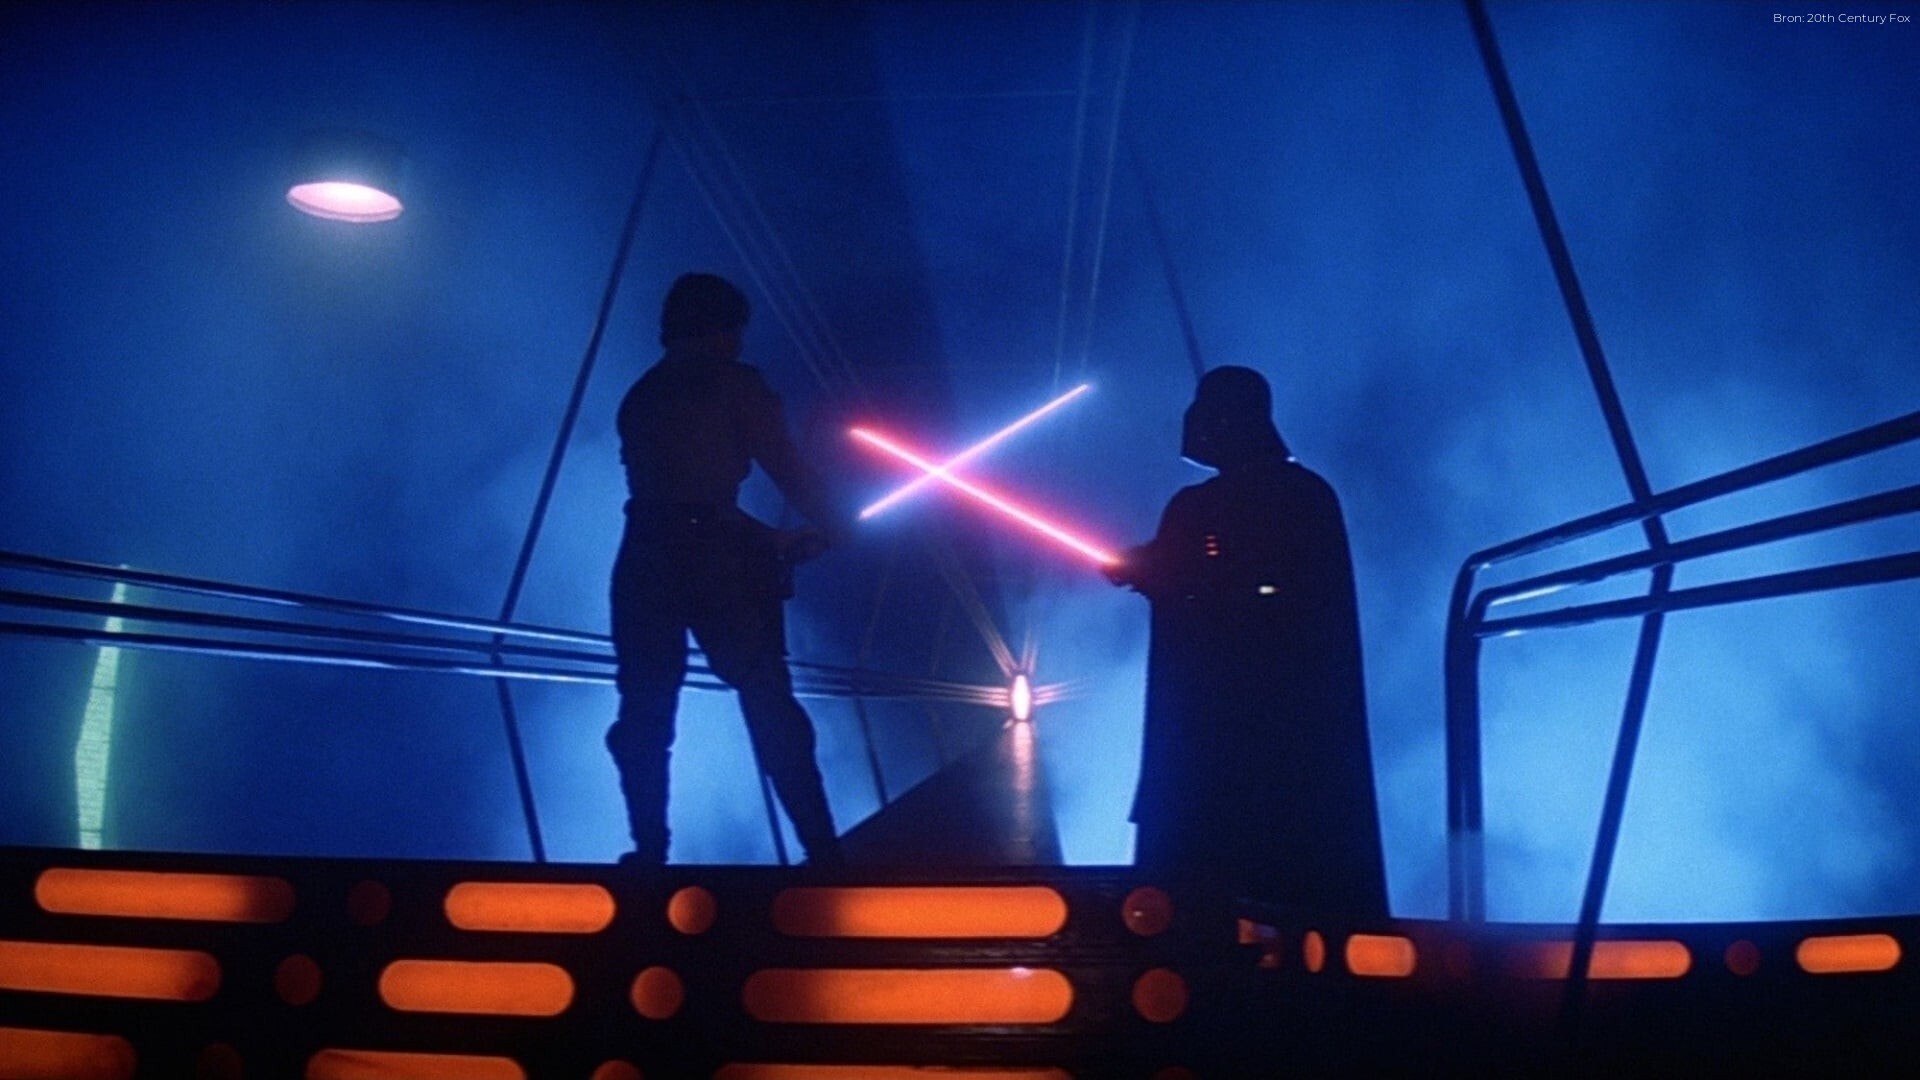 Star Wars: Episode V - The Empire Strikes Back